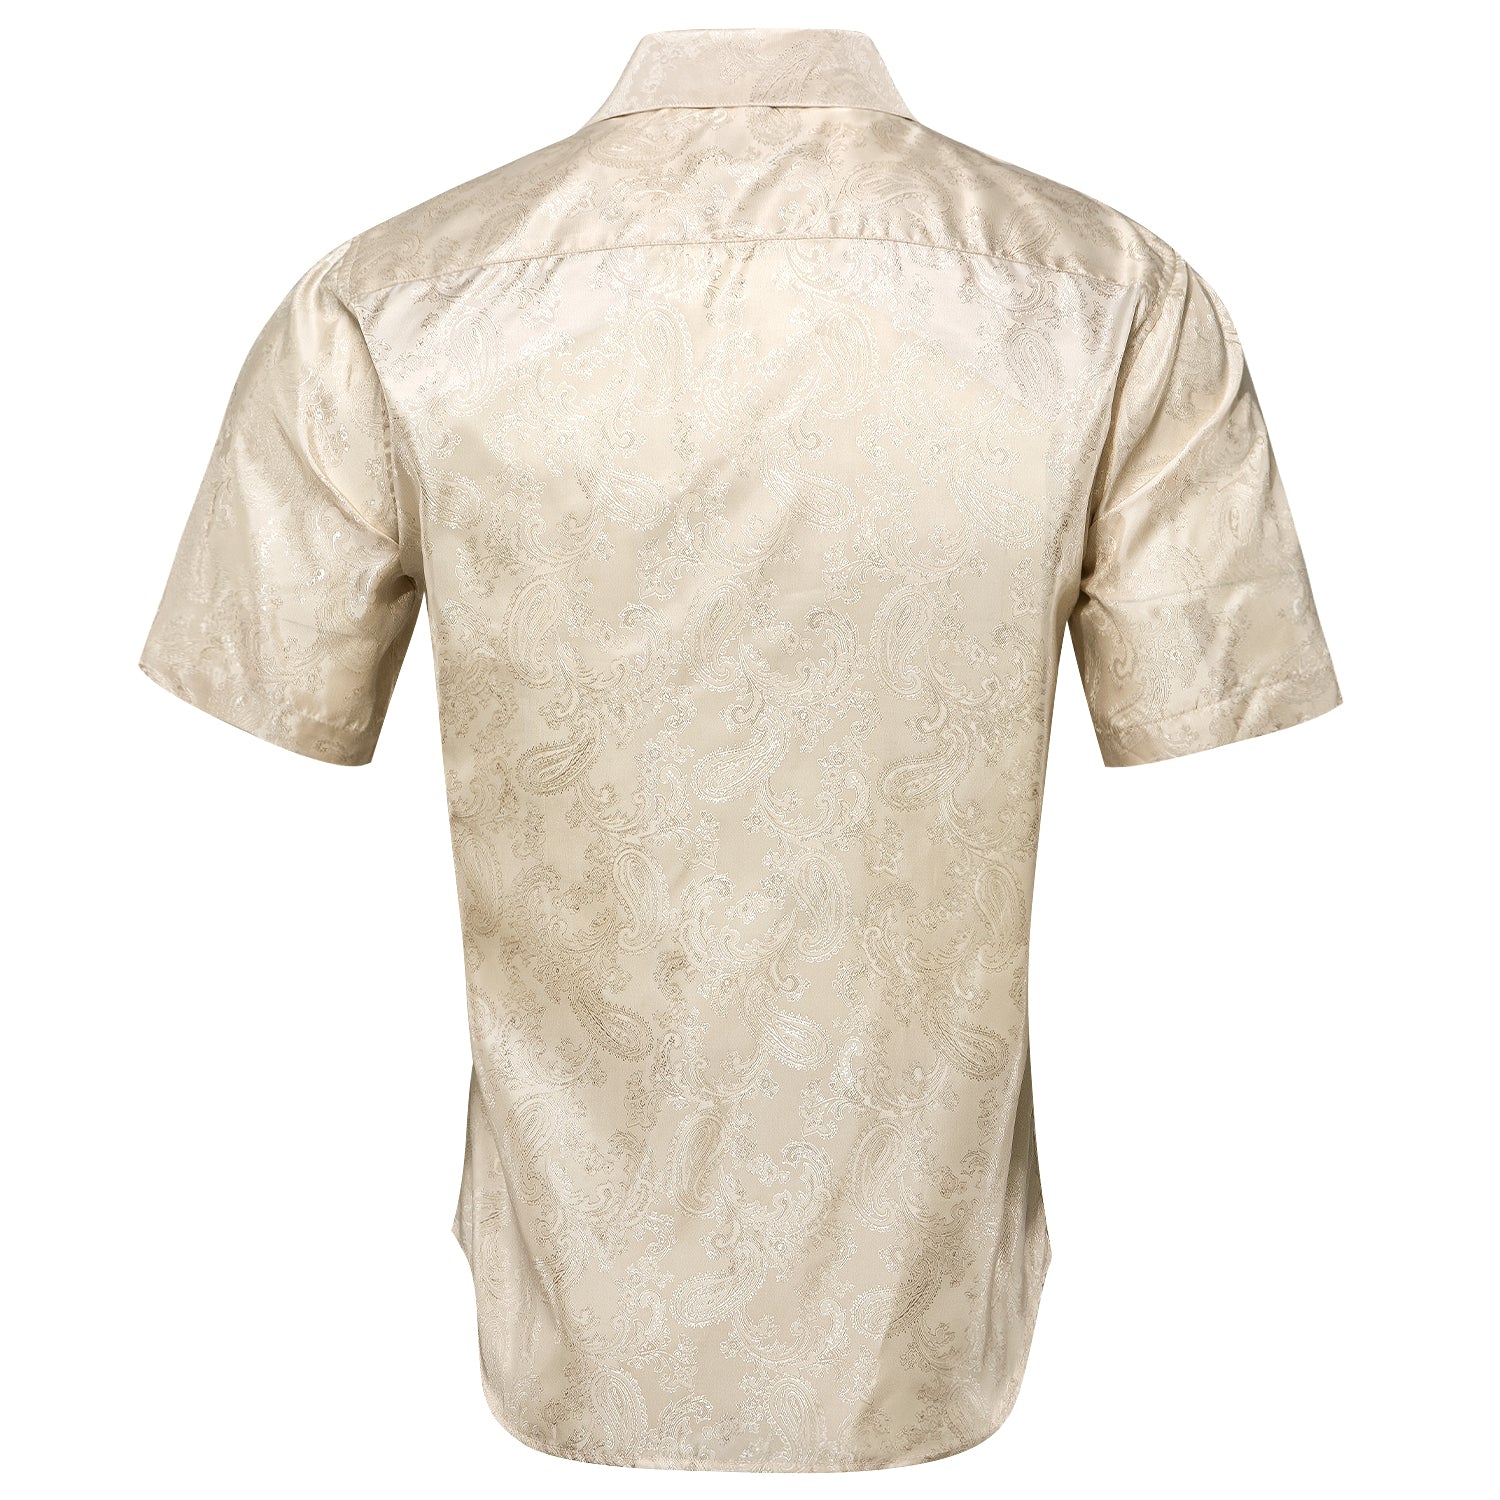 New Champagne Paisley Silk Men's Short Sleeve Shirt